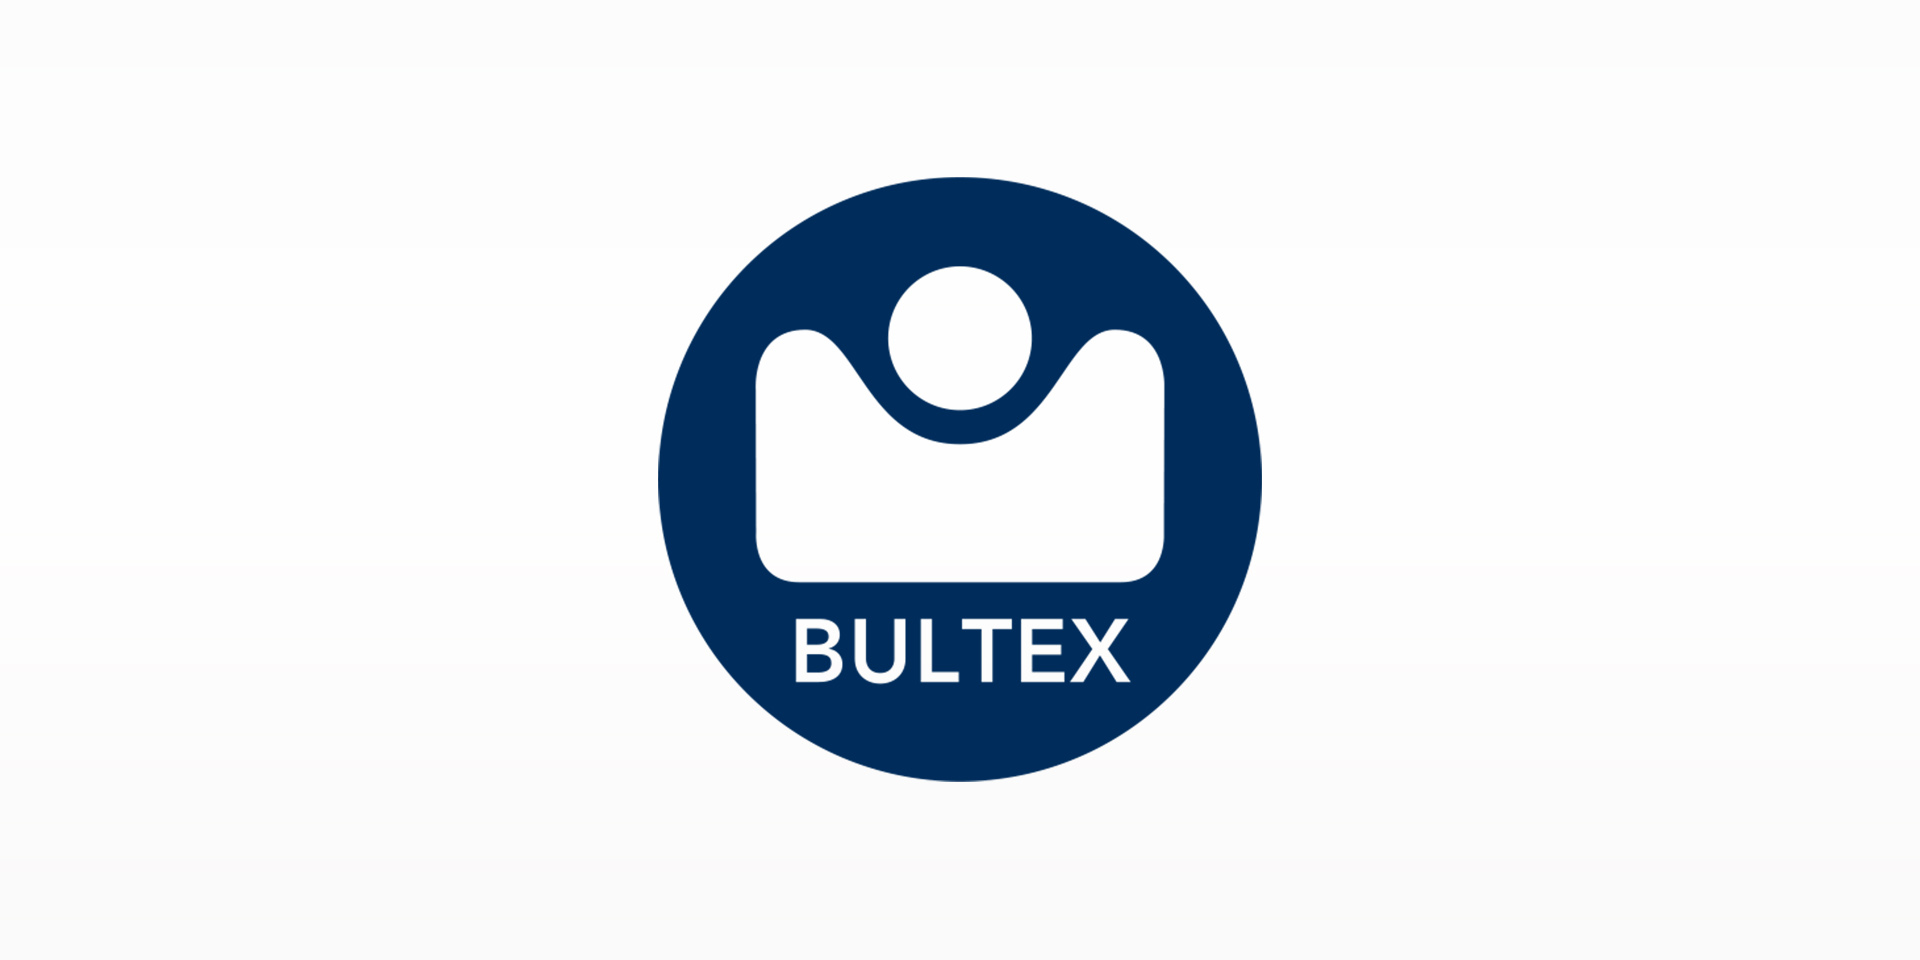 Bultex - Literie - Fabrication française